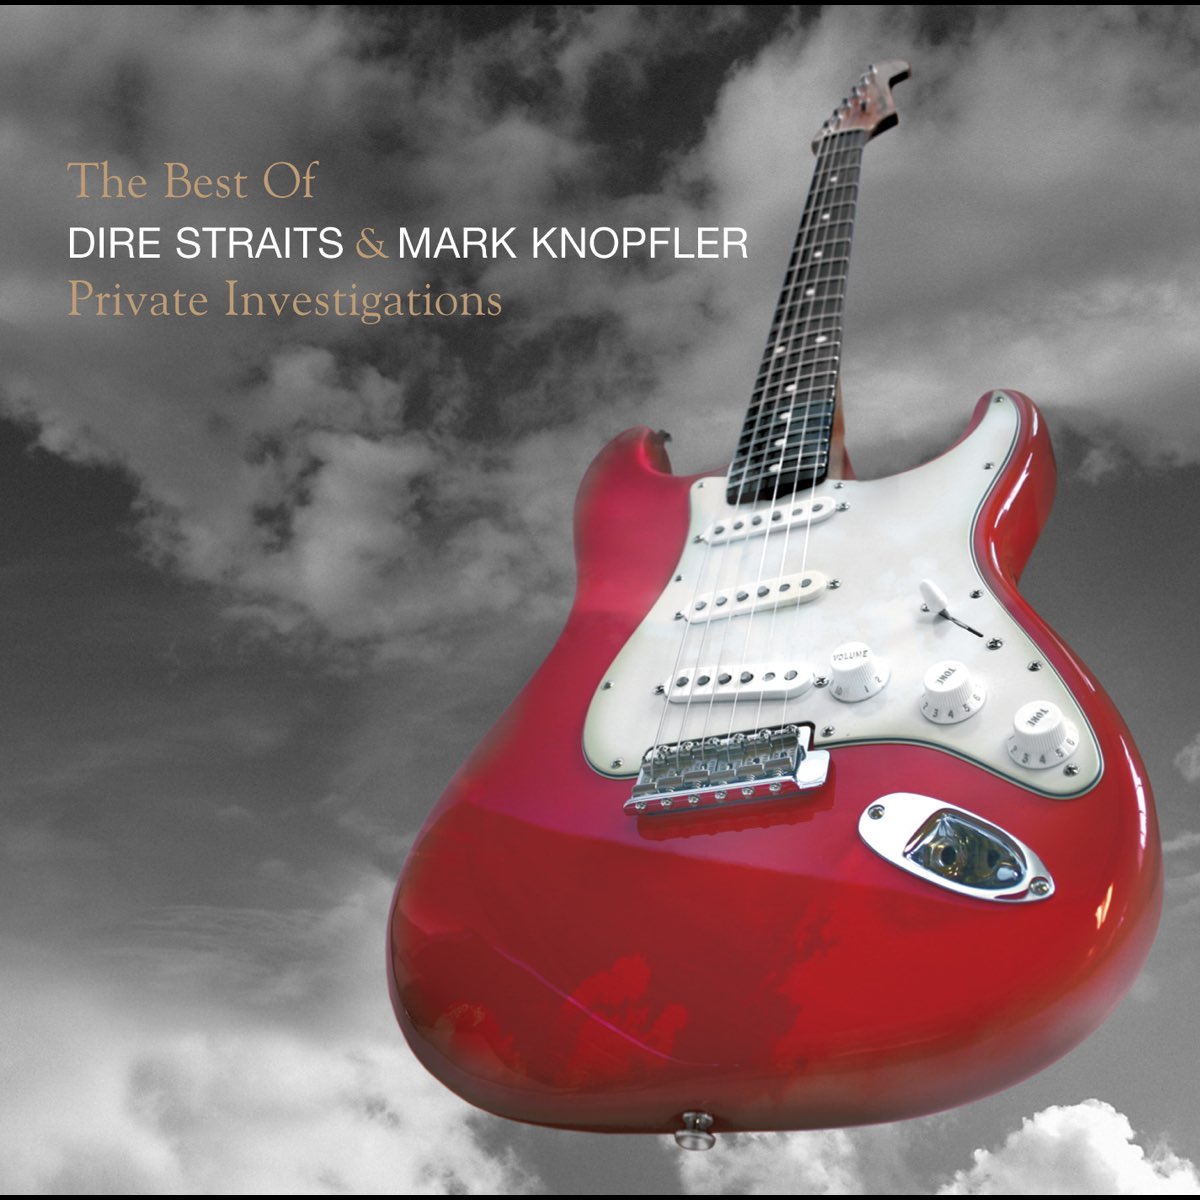 Рок Mercury Mark, Knopfler, Dire Straits - Private Investigations - The Best Of (Limited Red Vinyl 2LP) сборник яростный стройотряд 1 cd